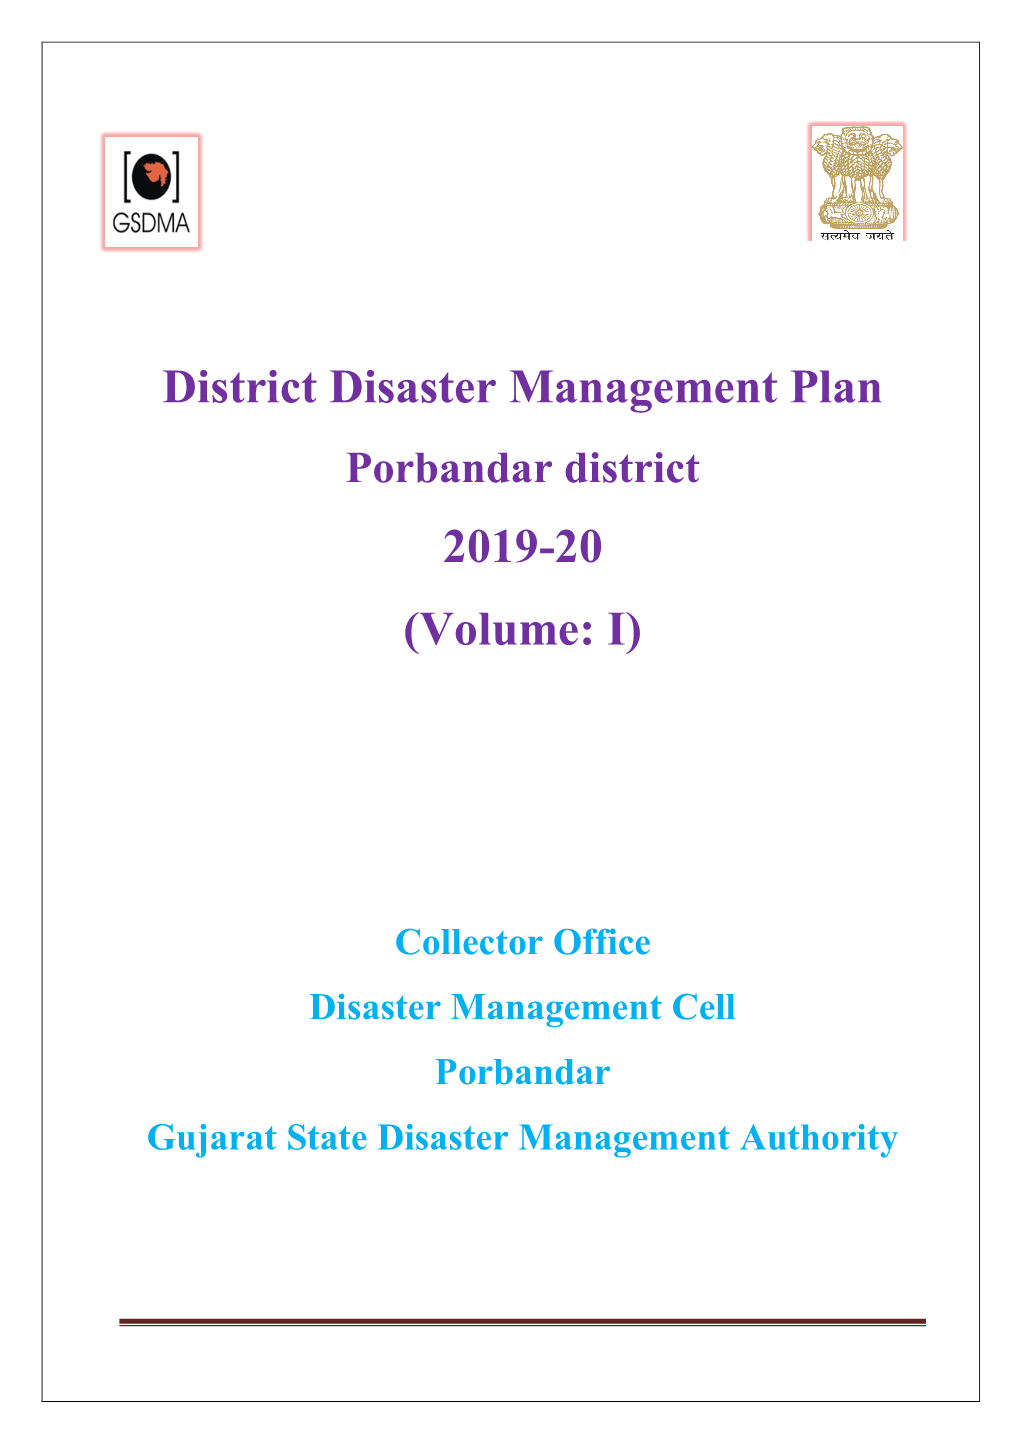 District Disaster Management Plan 2019-20 (Volume: I)